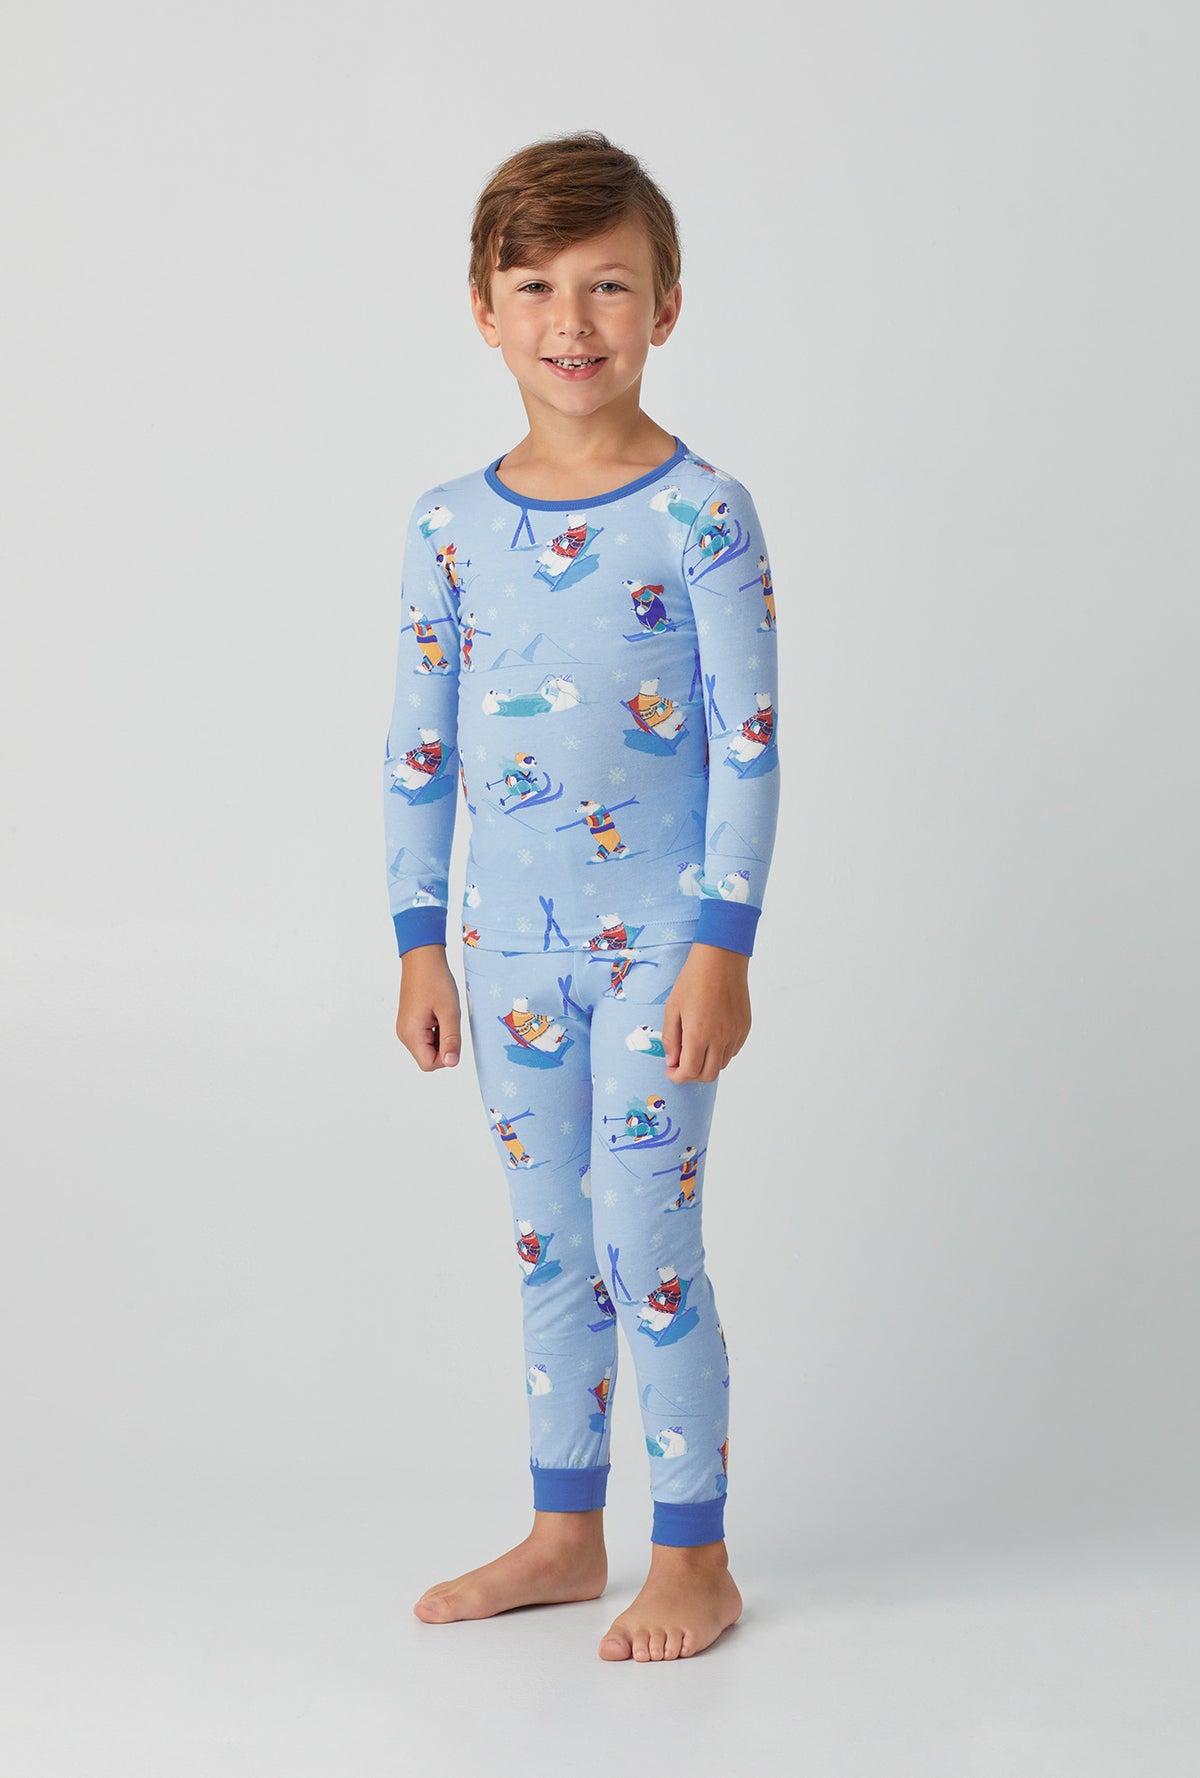 A kid wearing  light blue Long Sleeve Stretch Jersey Kids PJ Set with Backcountry Bears print